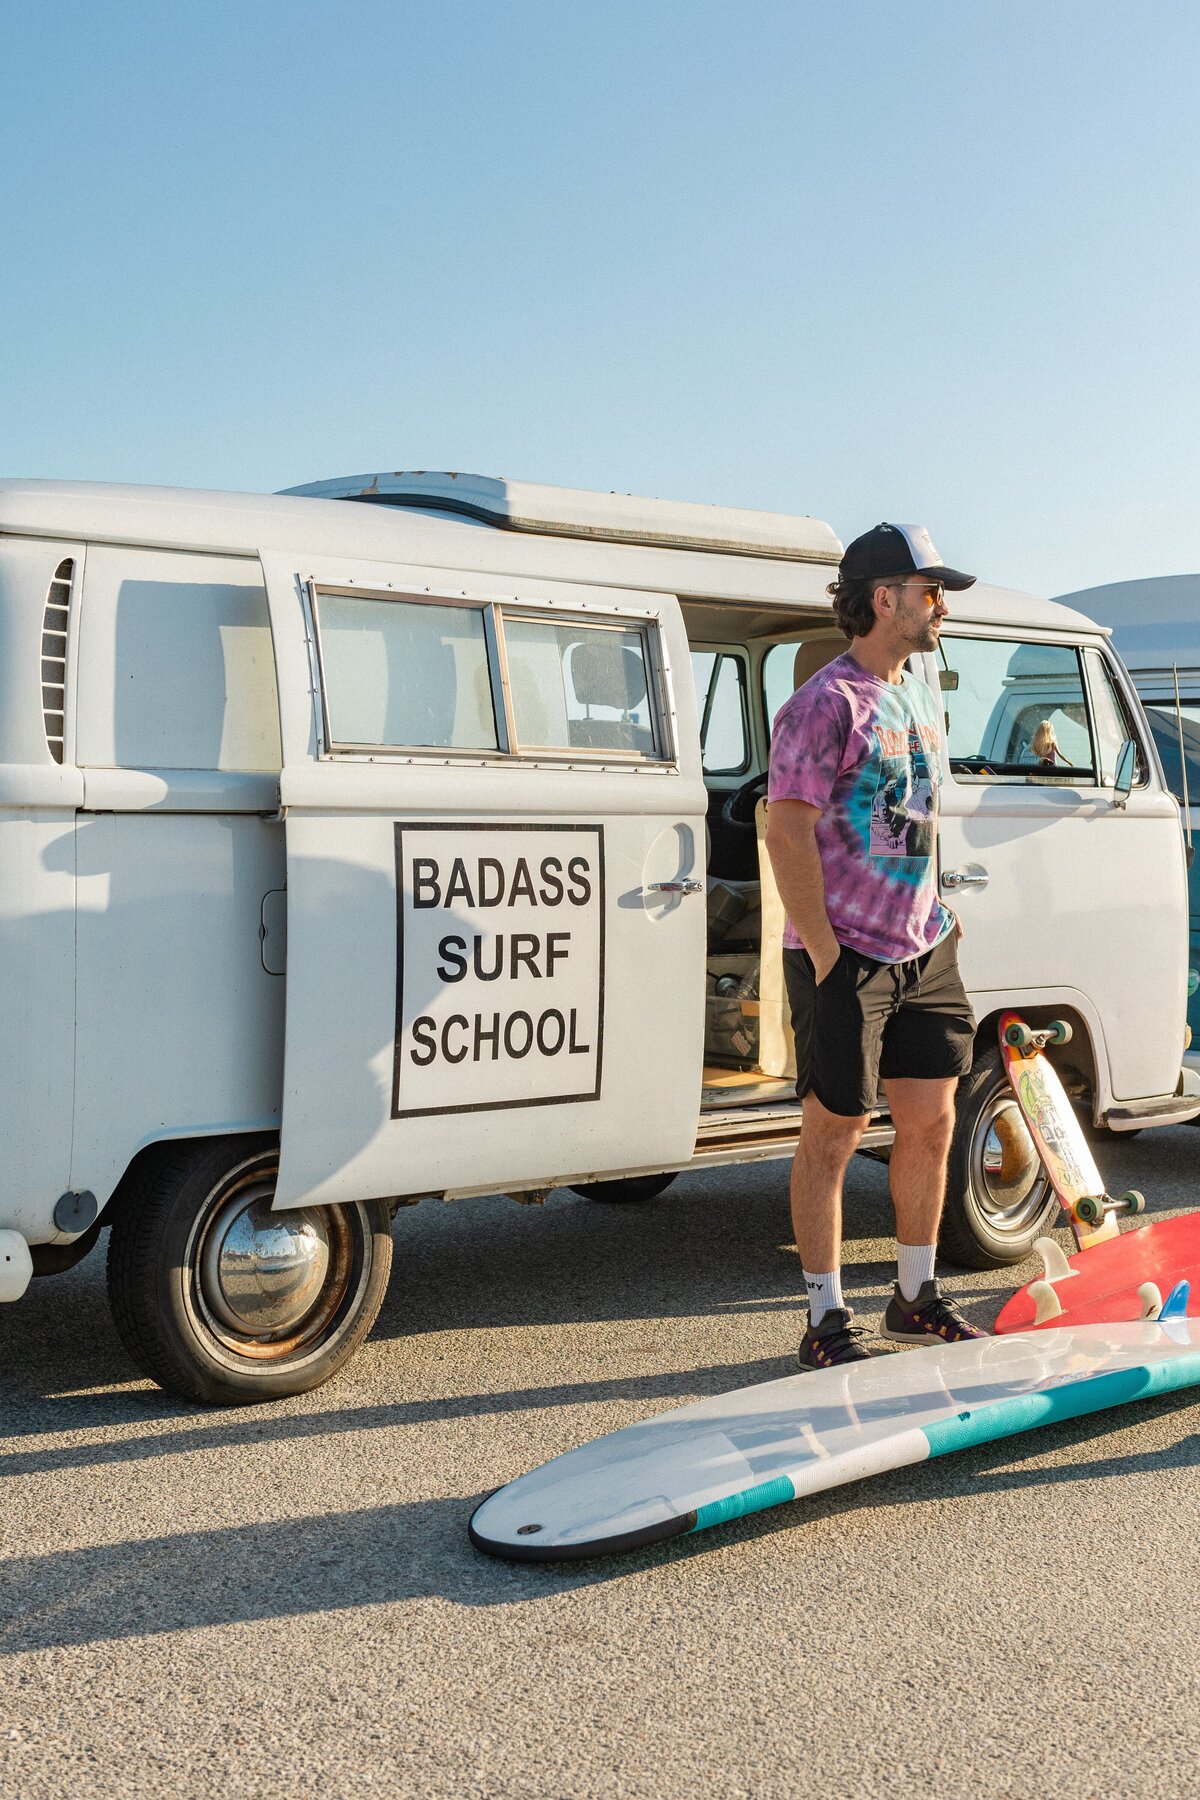 Badass-Surf-School-Venice-Beach-California-Surf-Lifestyle-Culture-042